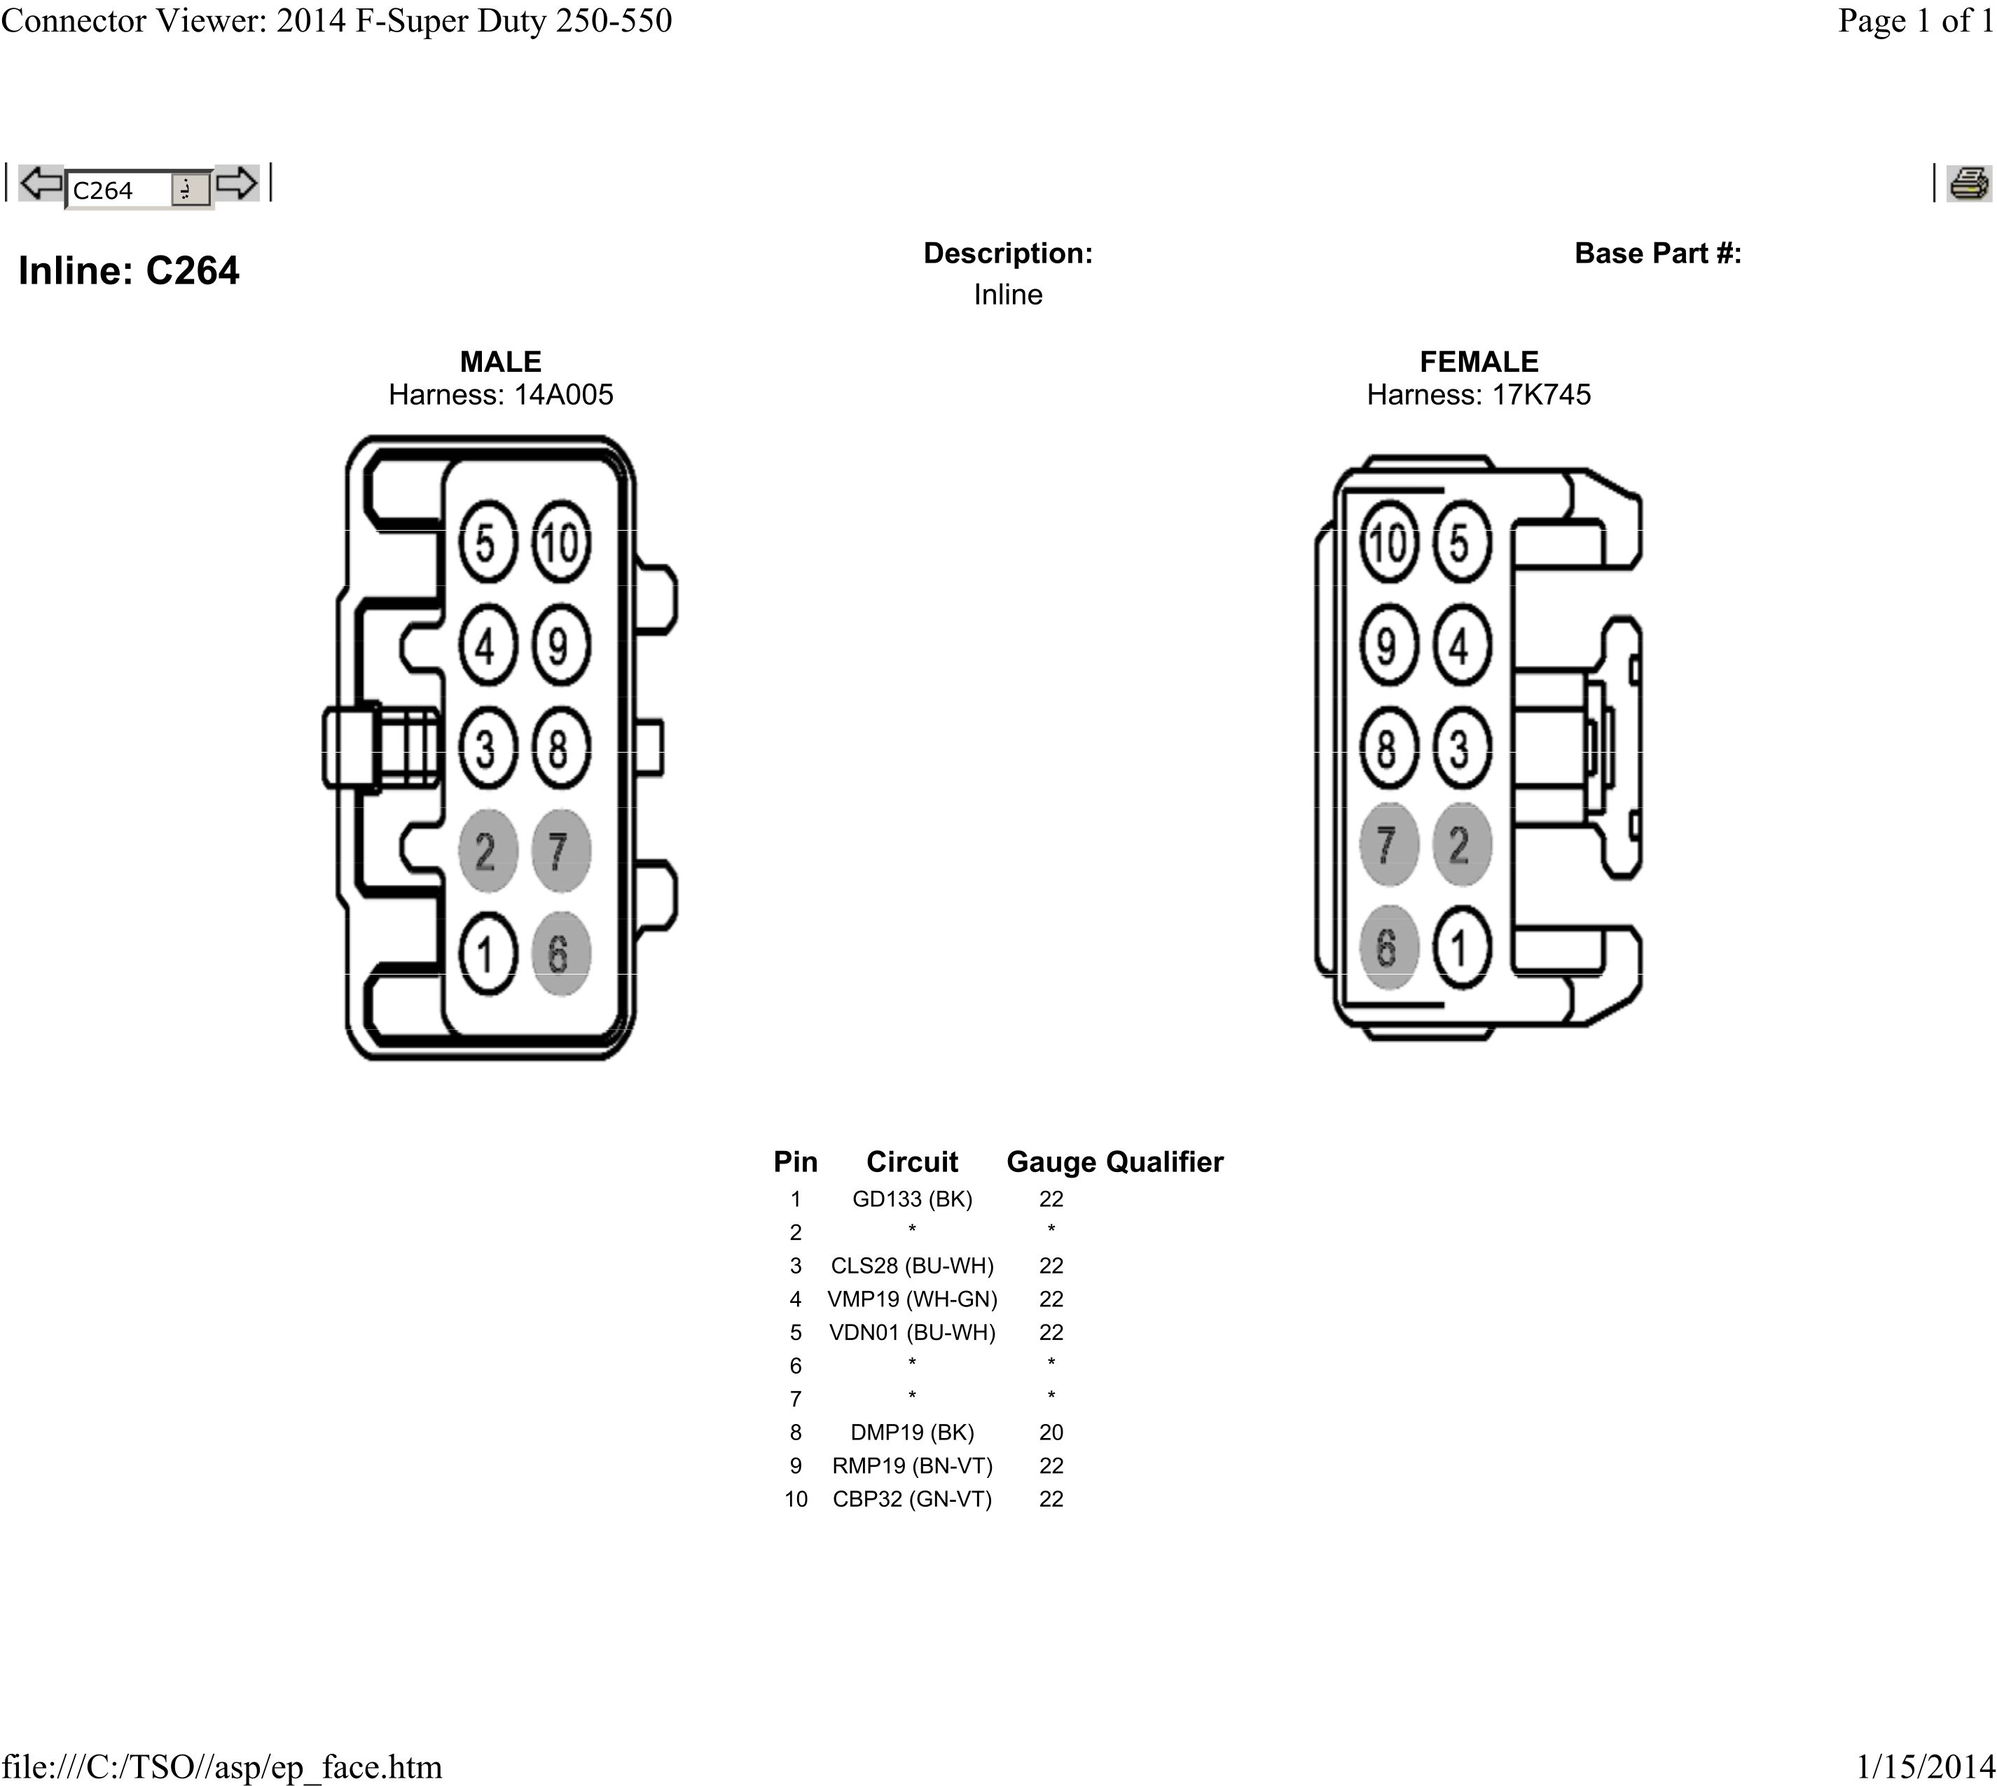 Diagram 2017 Ford Super Duty Wiring Diagram Camera Full Version Hd Quality Diagram Camera Tempodiagrama Robertaalteri It